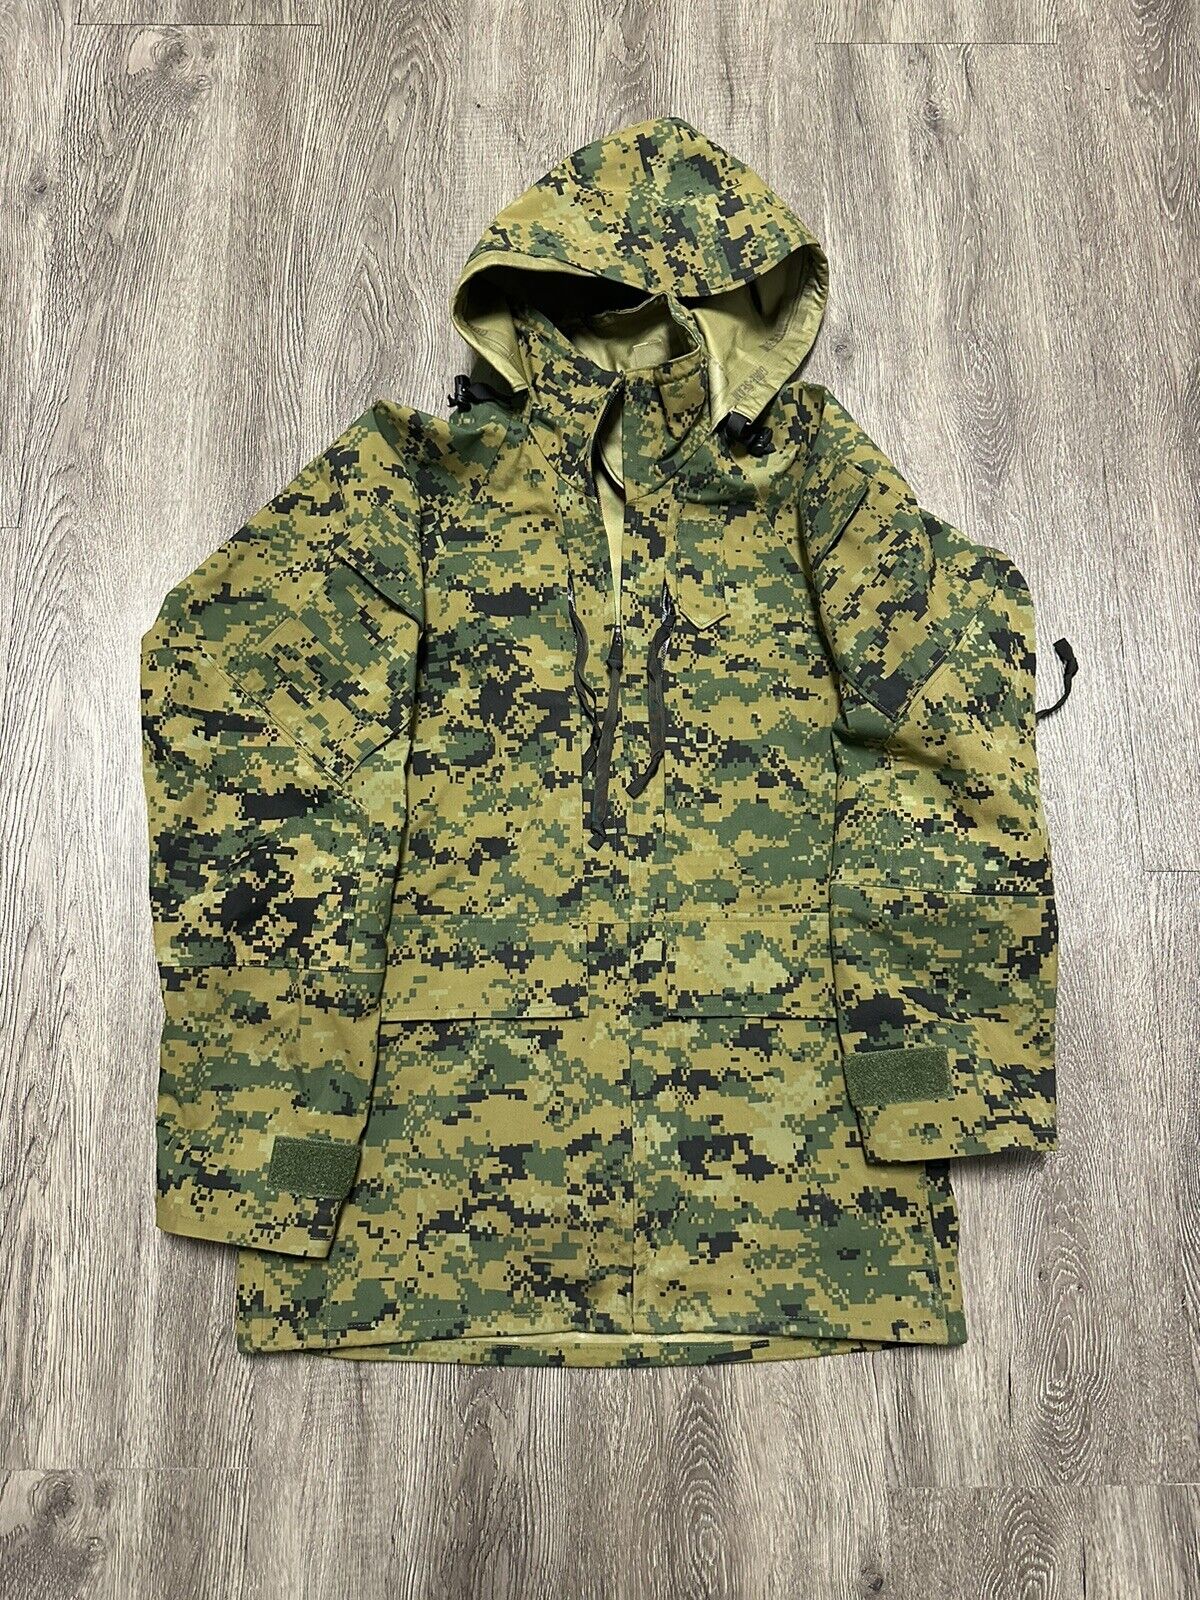 USMC GoreTex Jacket APEC Parka MARPAT Woodland Camouflage X Small Regular